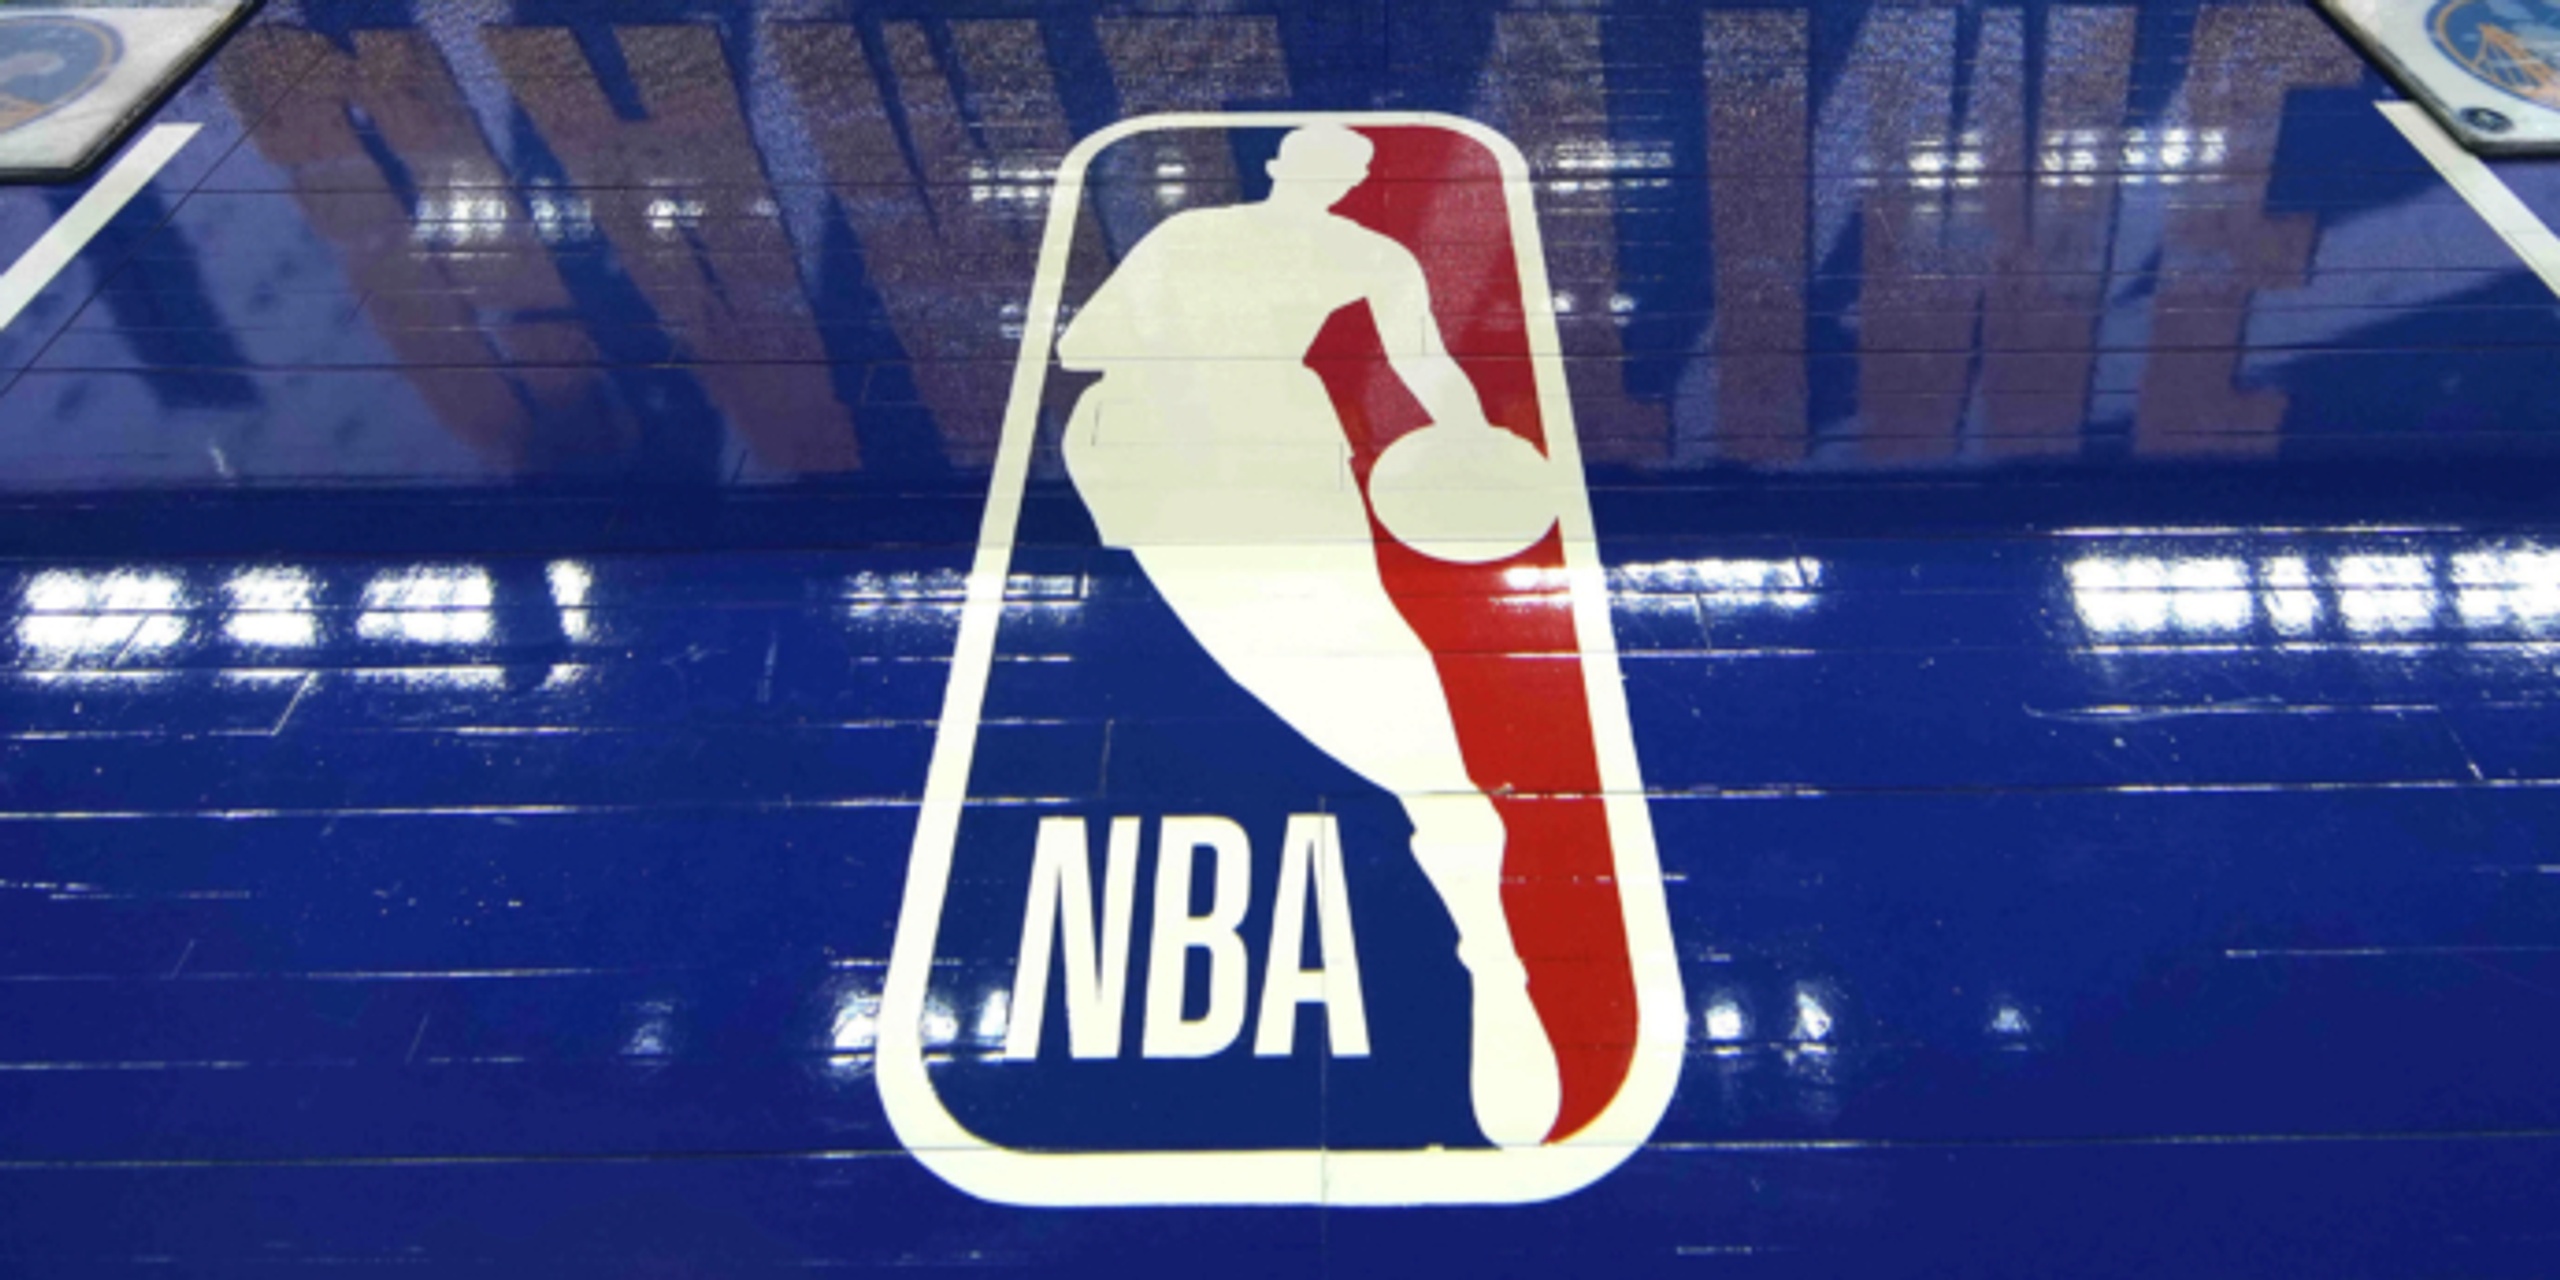 NBA announces media availability, access policies for 2022-23 season